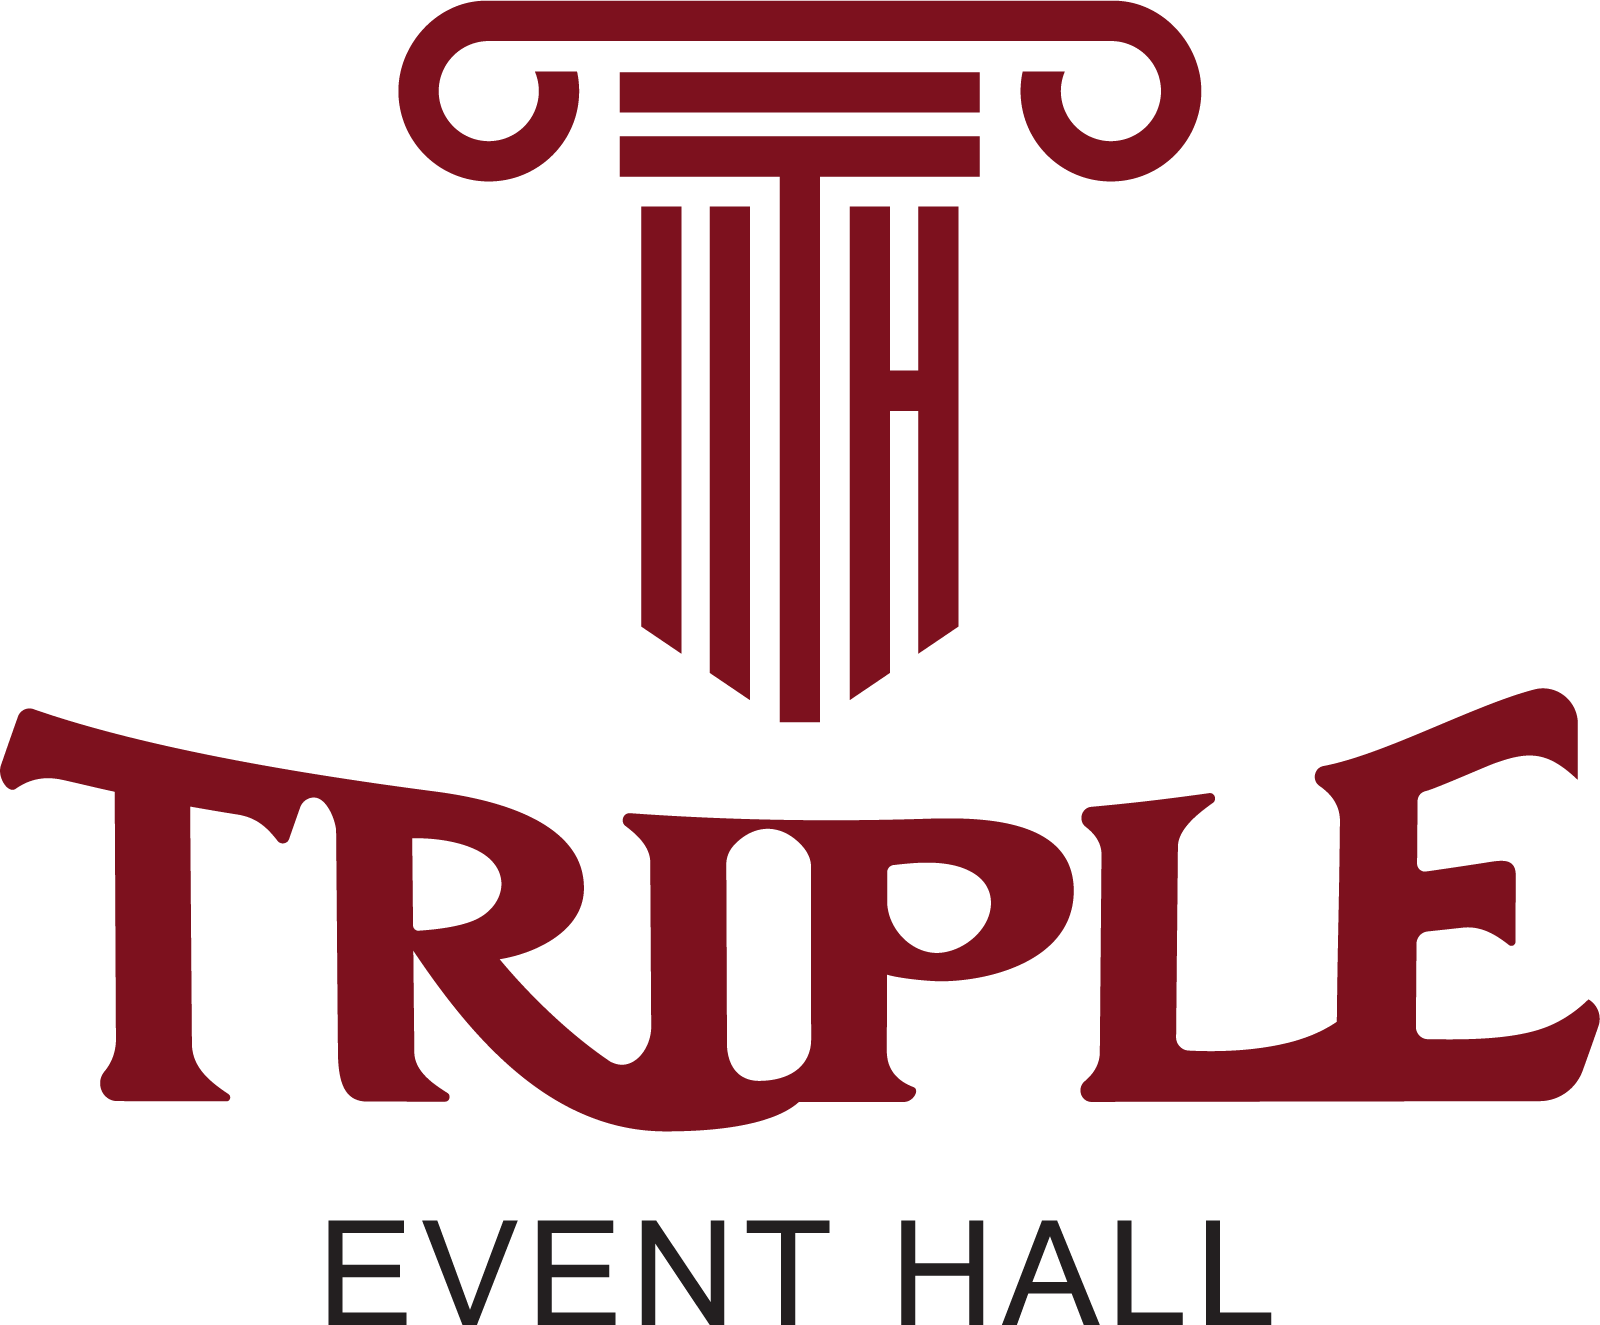 Triple Event Hall